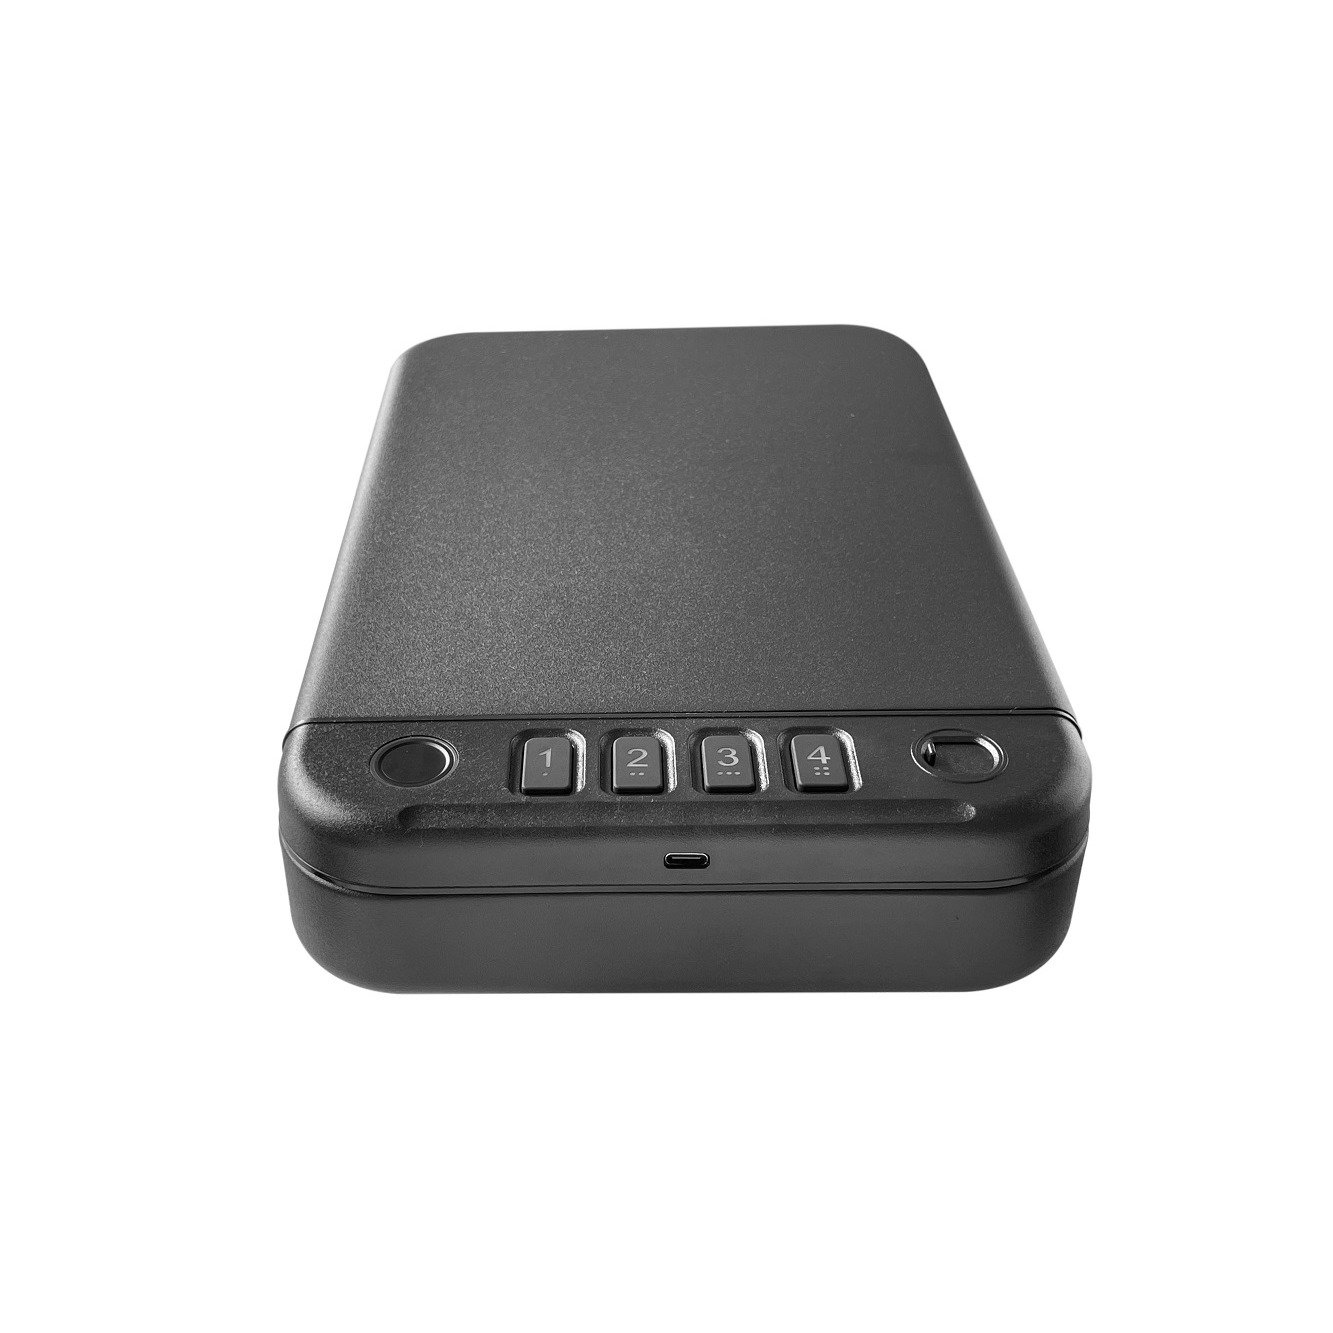 Cofre Smart Safewell - Mod Ps0101f C/ Biometria - 2